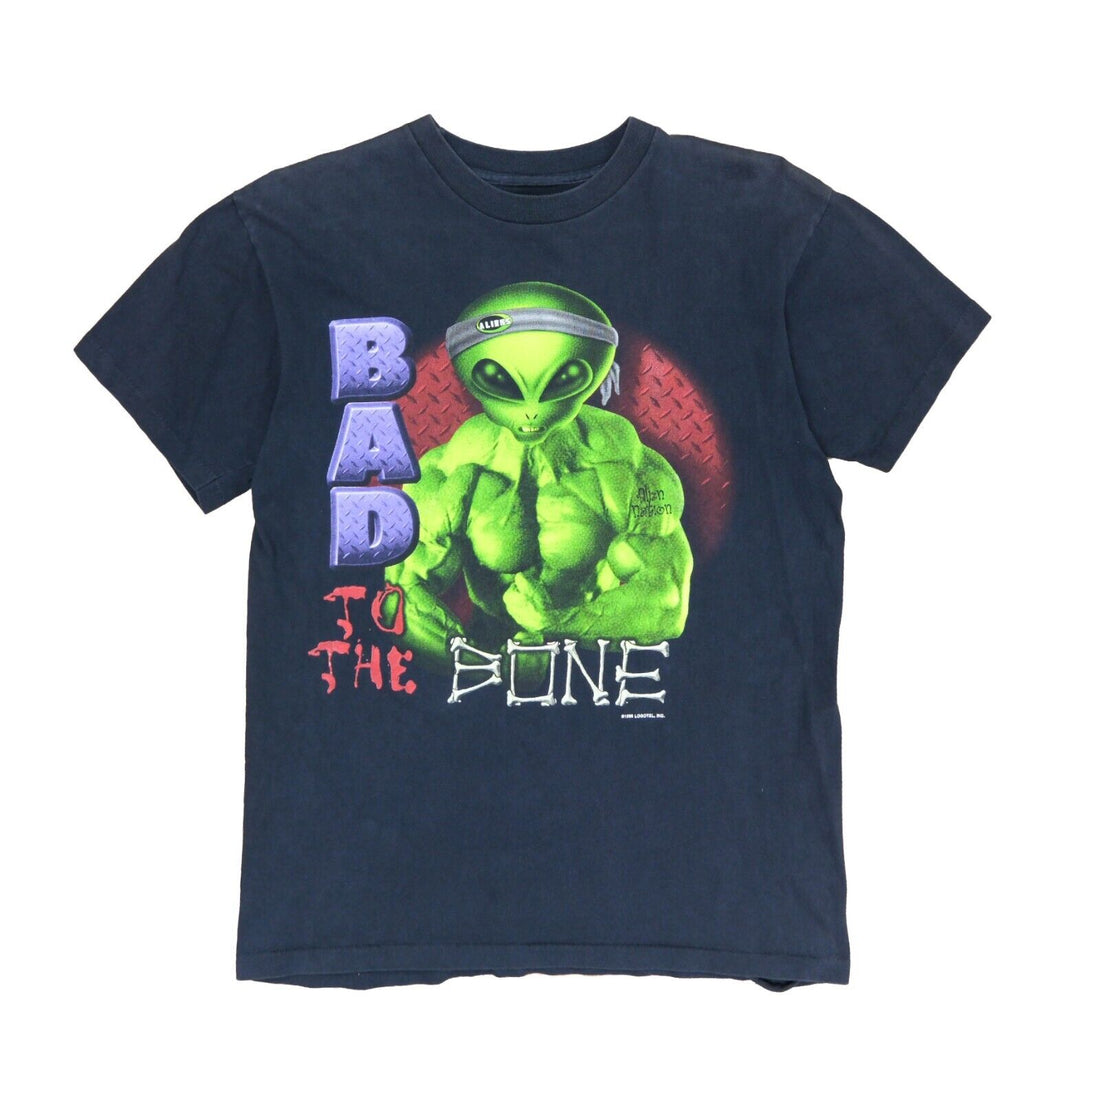 Vintage Alien Nation Bad To The Bone T-Shirt Size Medium Black Skate 1996 90s